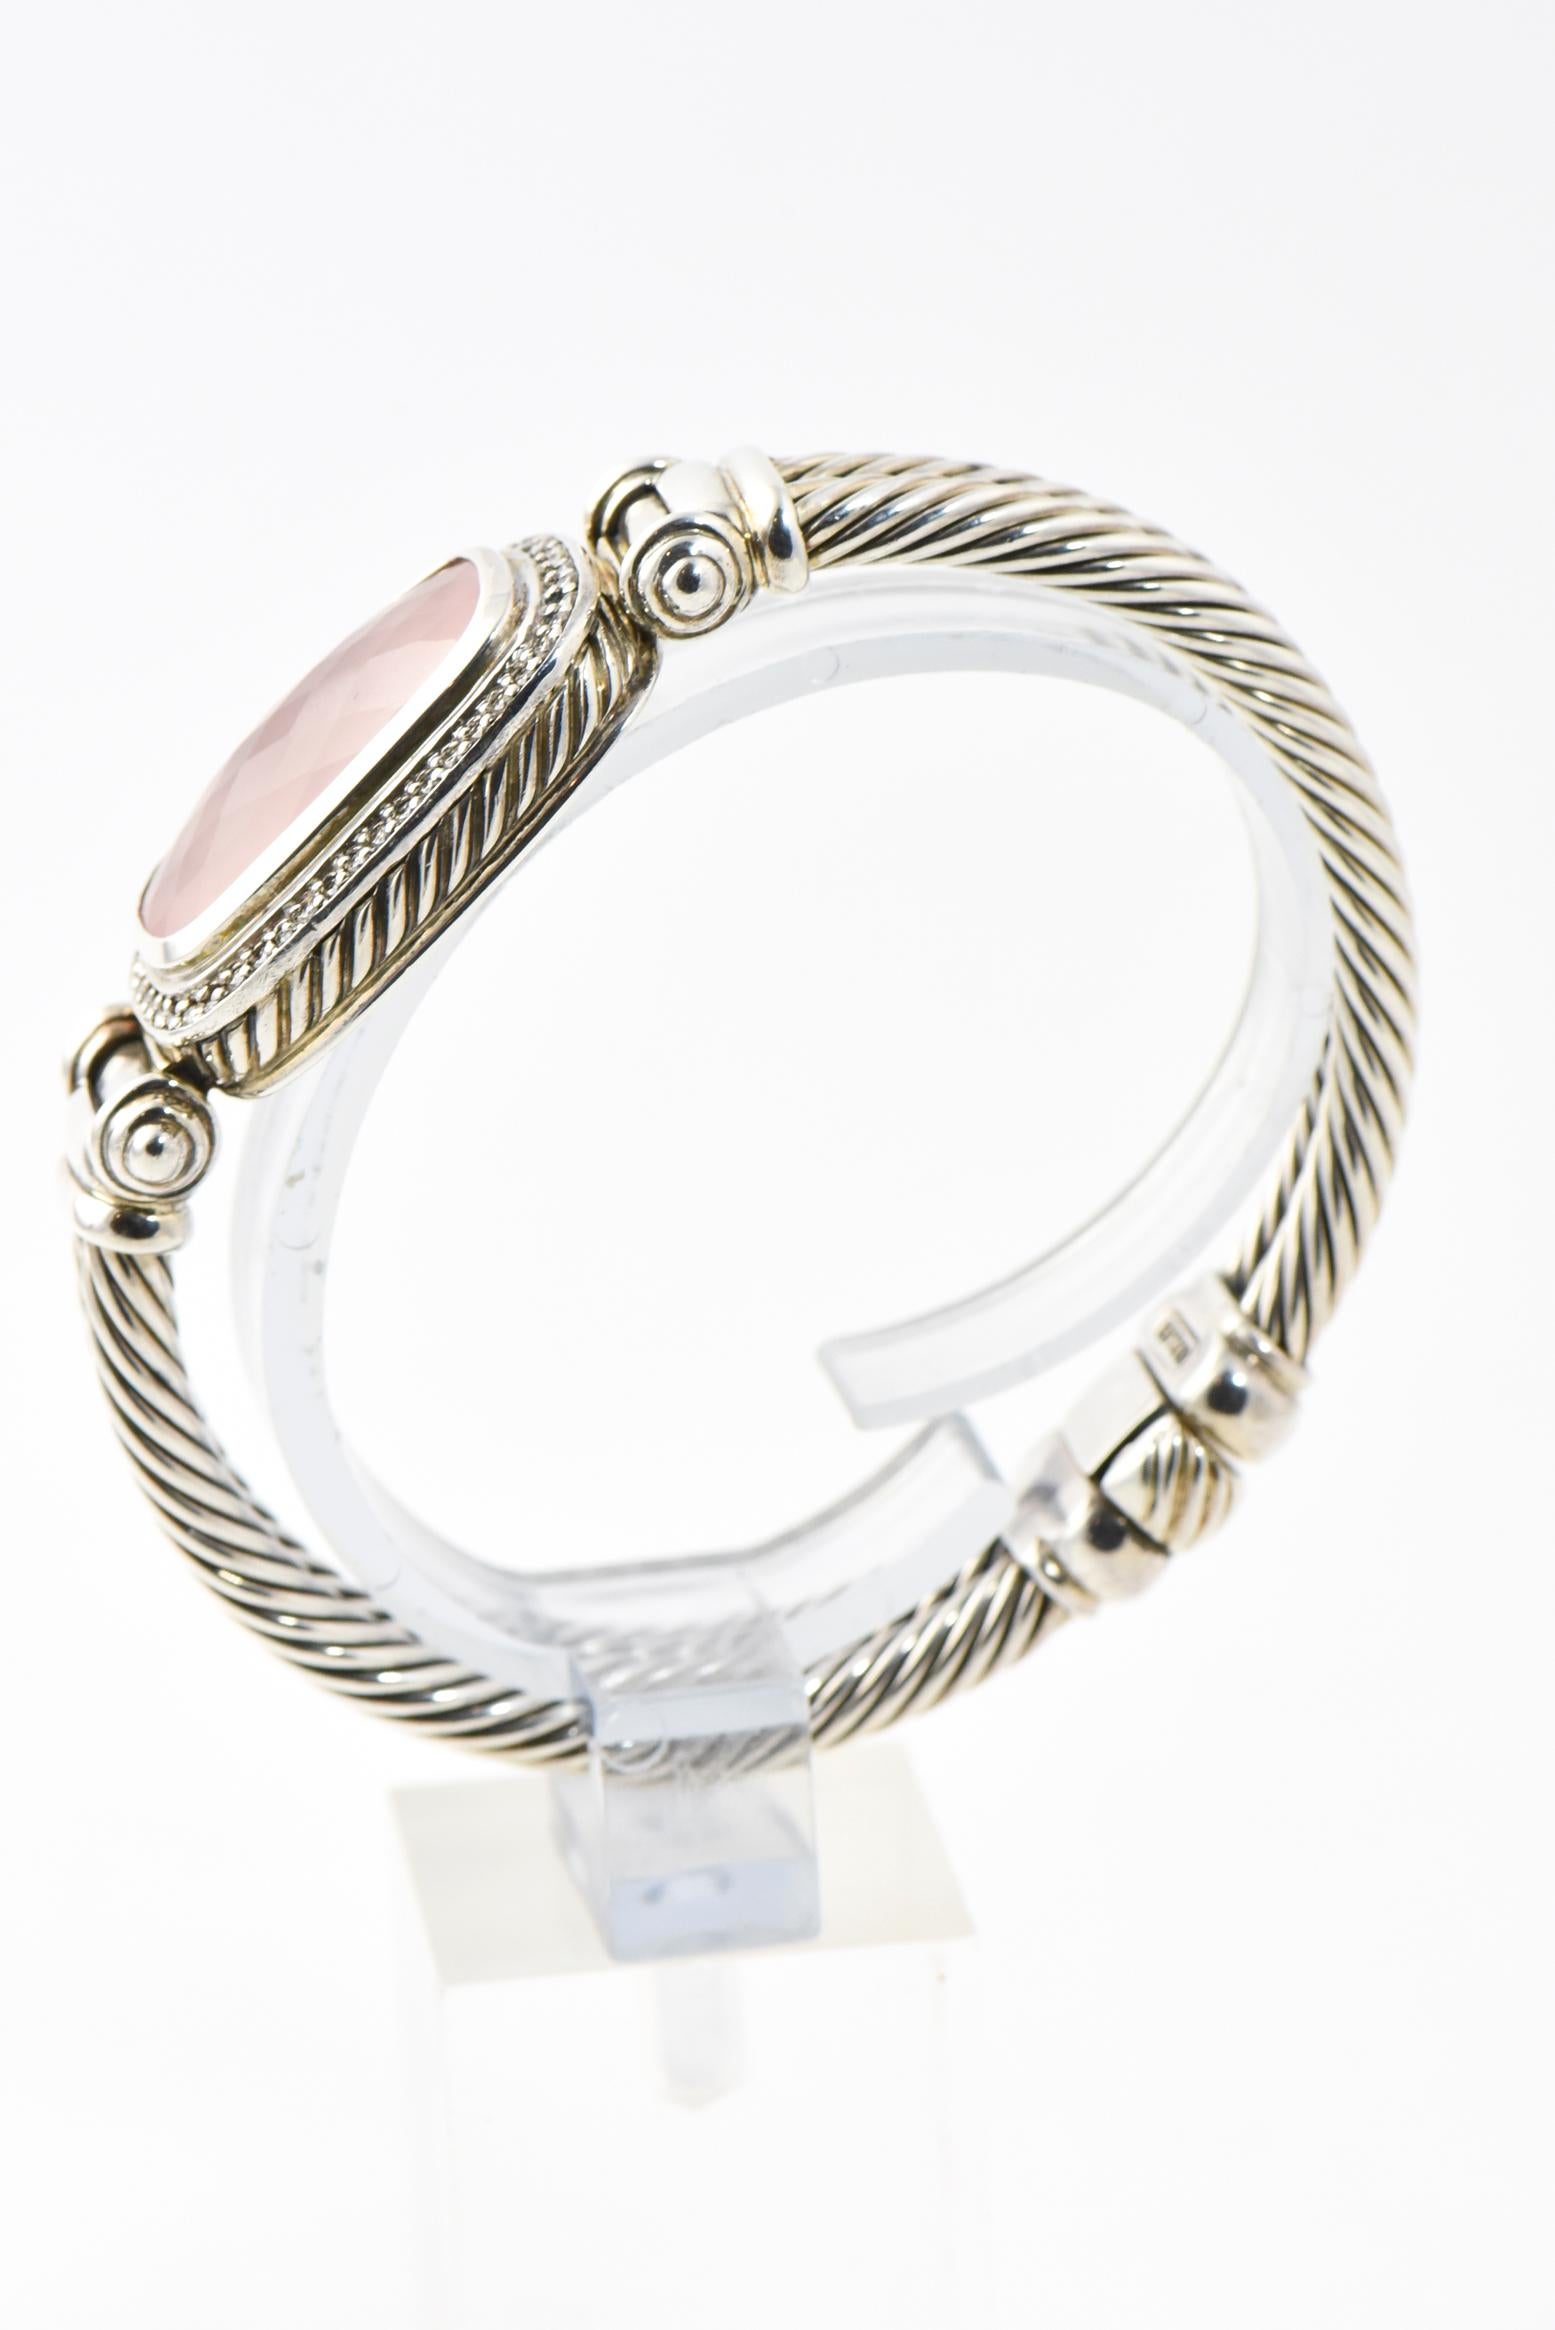 david yurman rose quartz bracelet